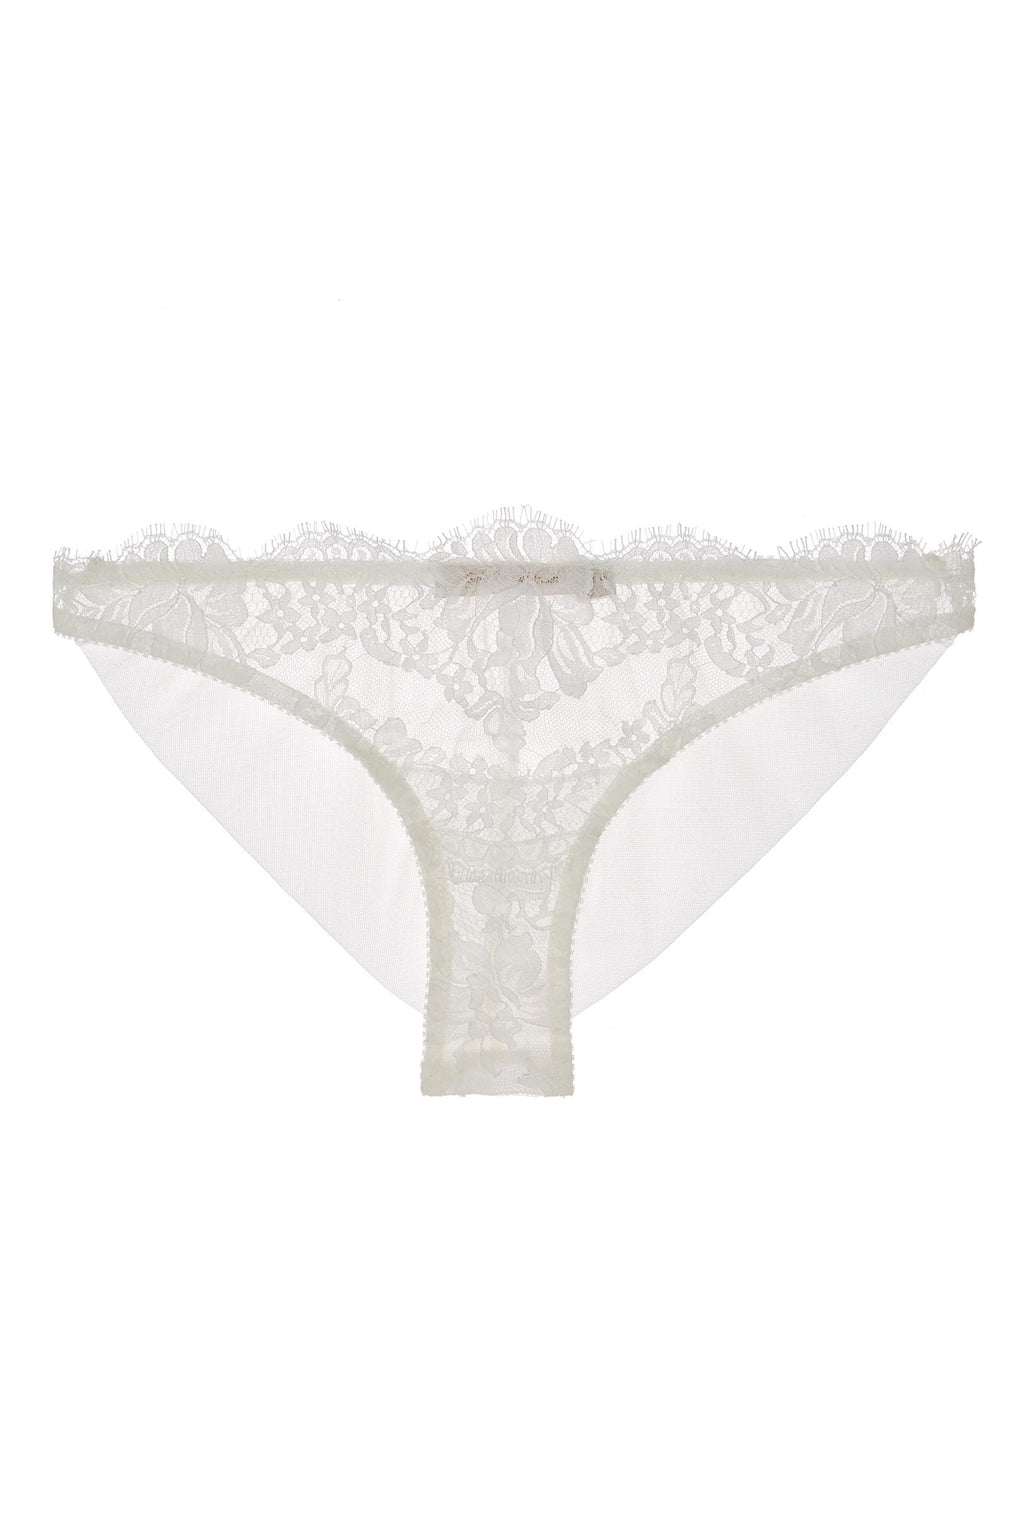 Premium AI Image  Isolated of Cheeky Underwear Lace Trim Bikini Briefs  Comfortable Fabric White Blank Clean Fashion